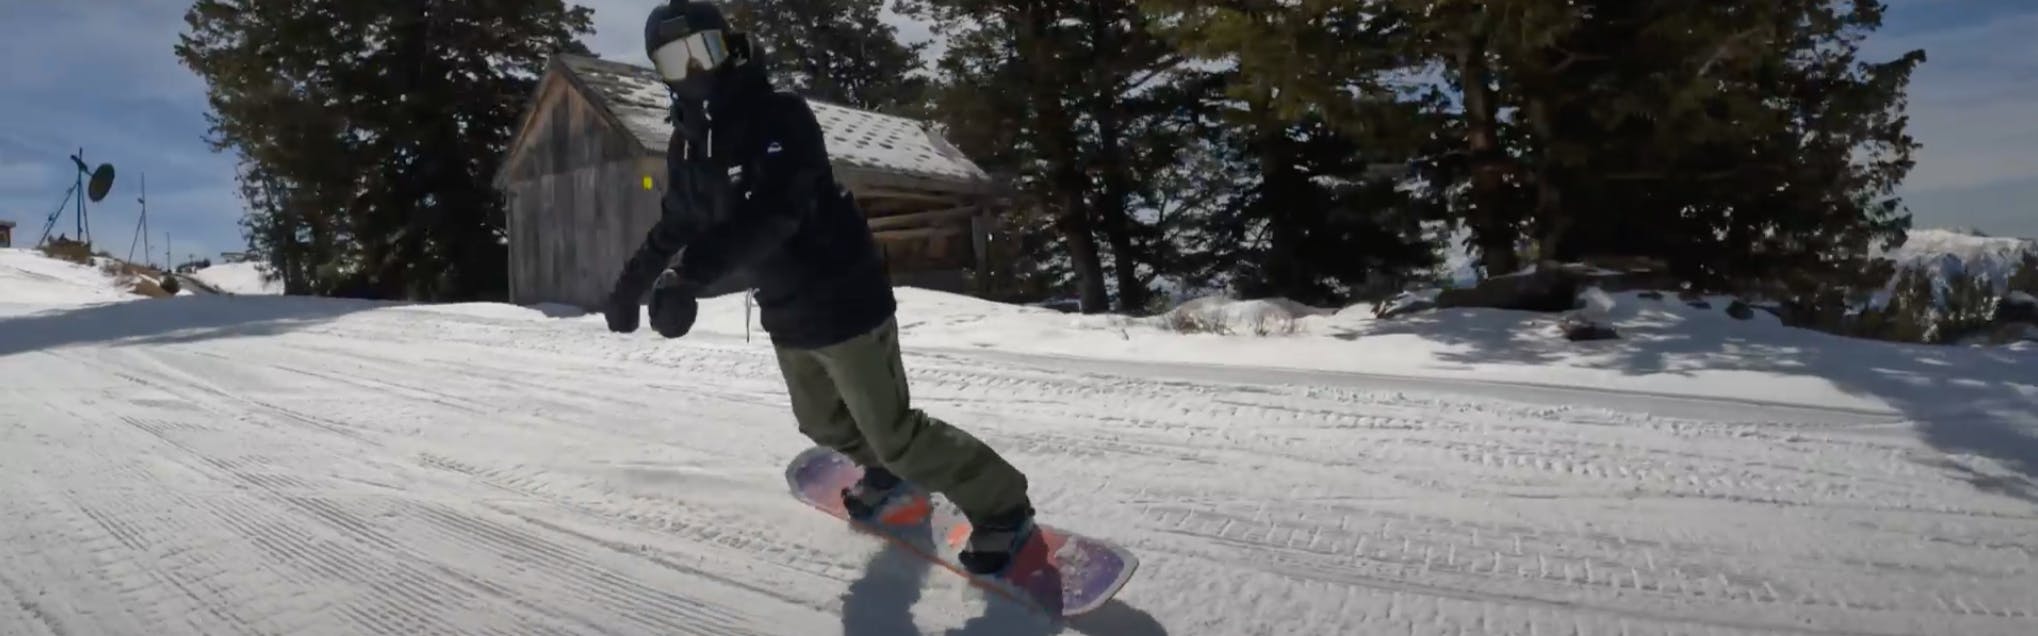 Snowboard Expert Everett Pelkey riding the 2023 Bataleon Evil Twin snowboard